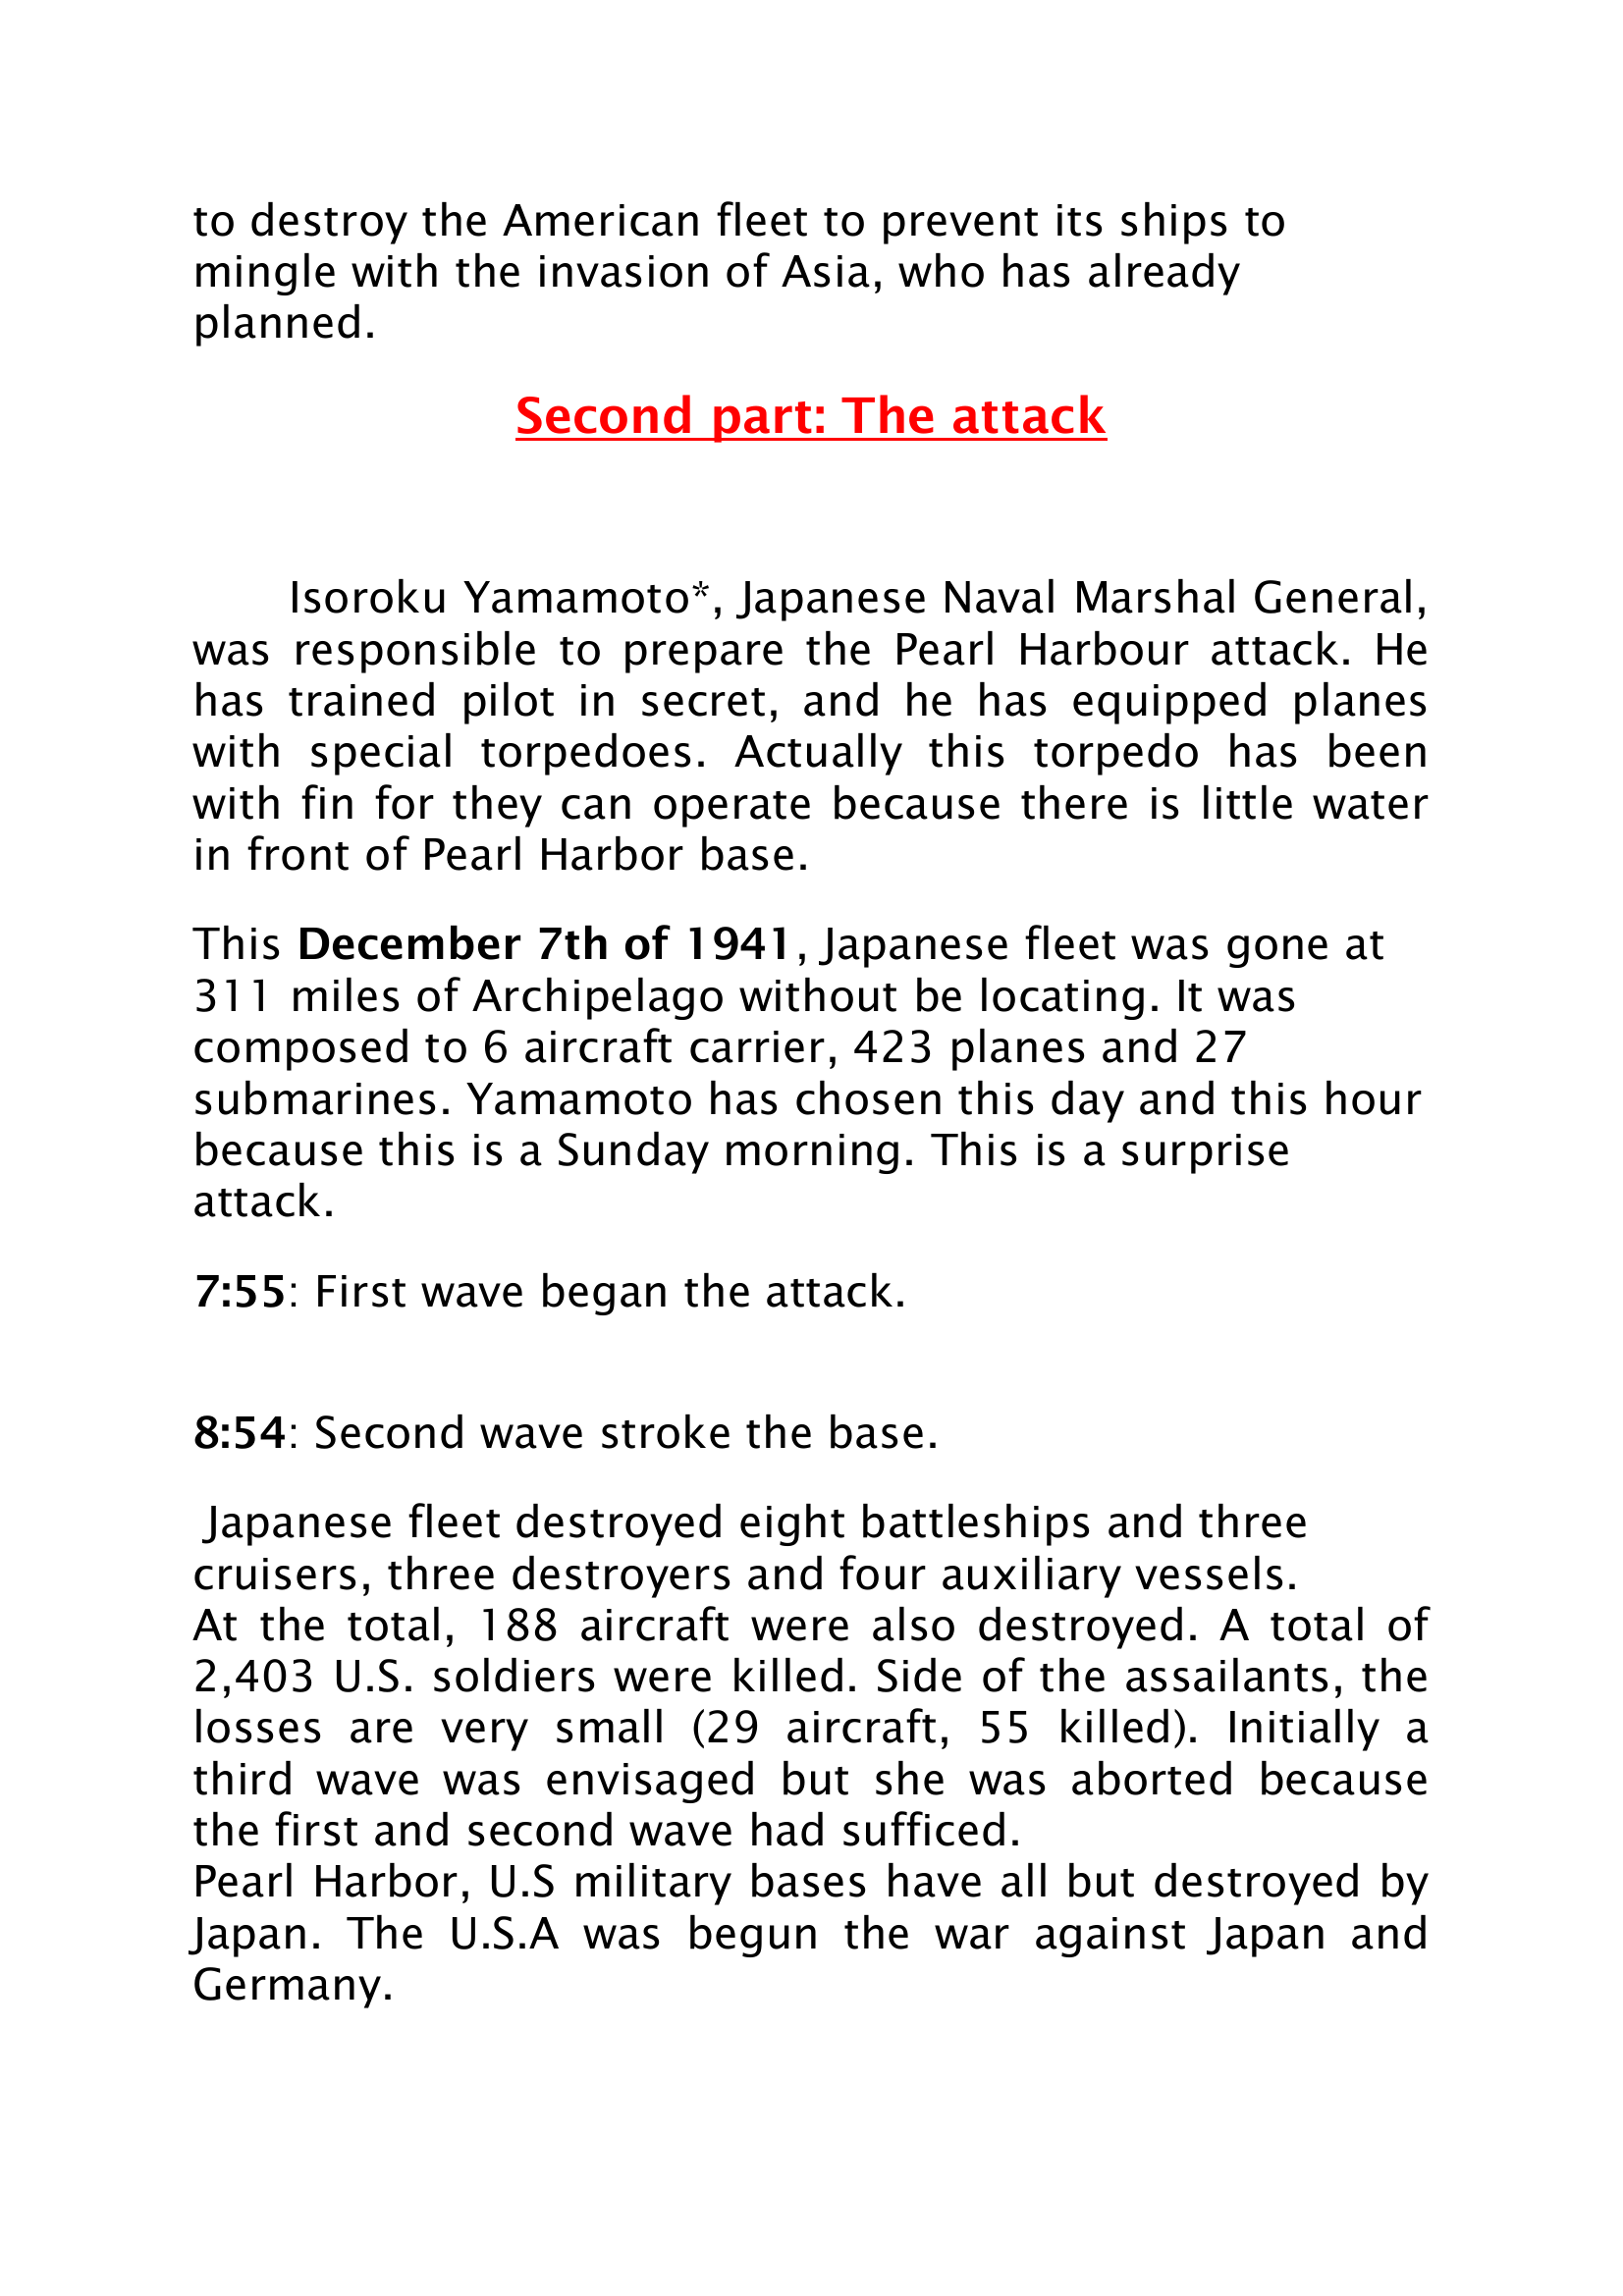 Prévisualisation du document THE ATTACK ON PEARL HARBOR